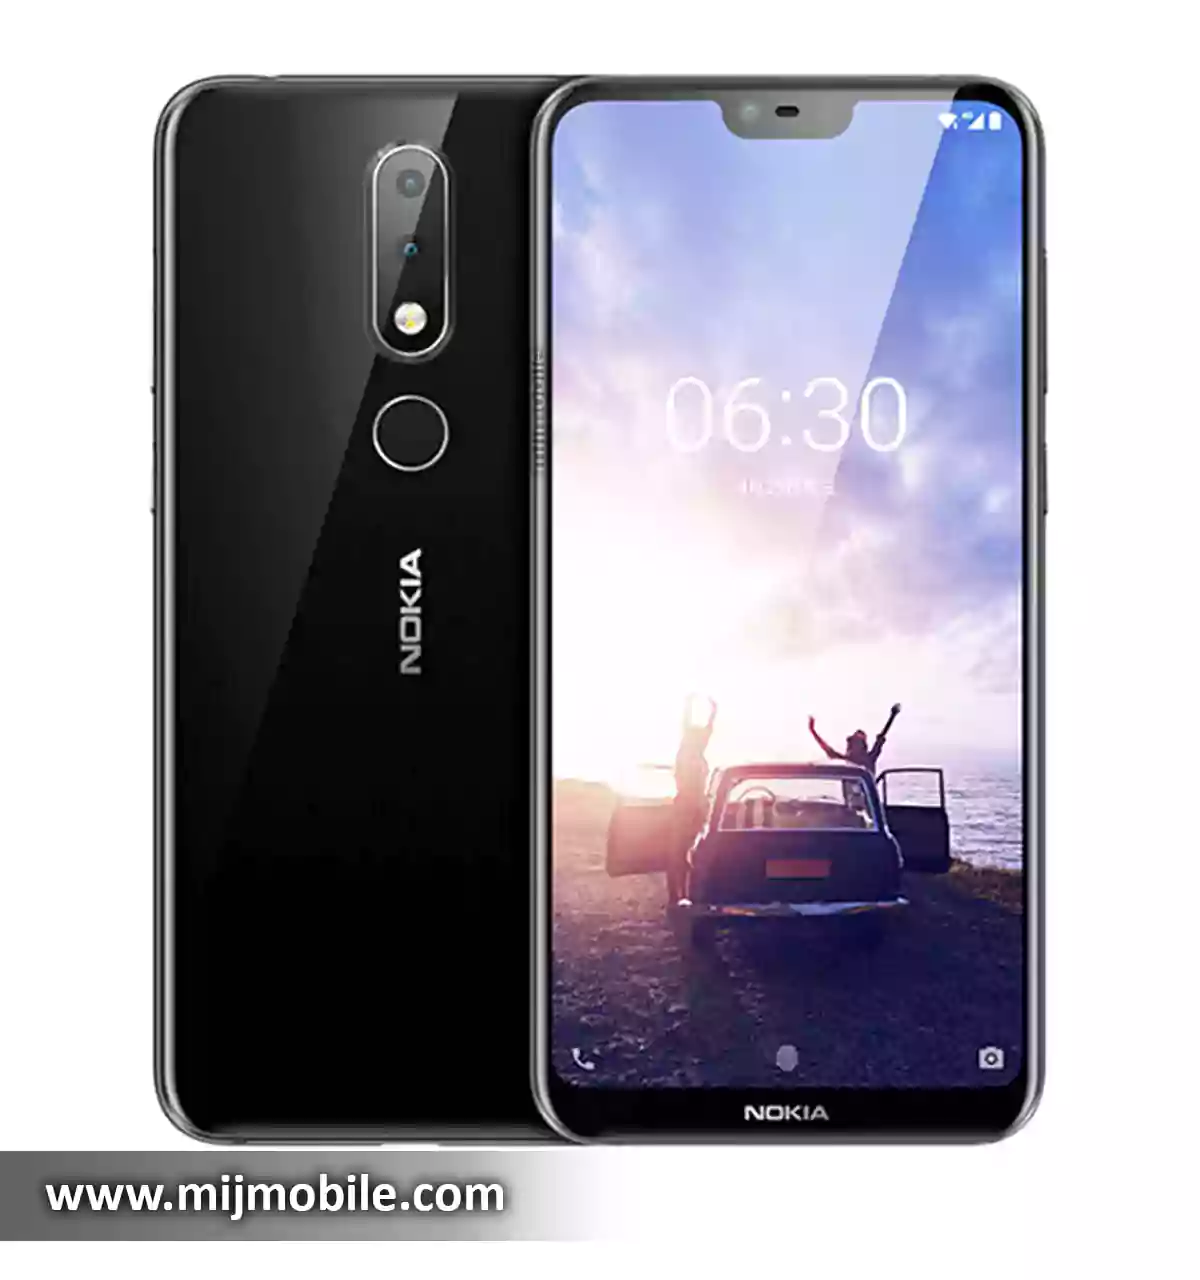 Nokia 6.1 Plus Price in Pakistan